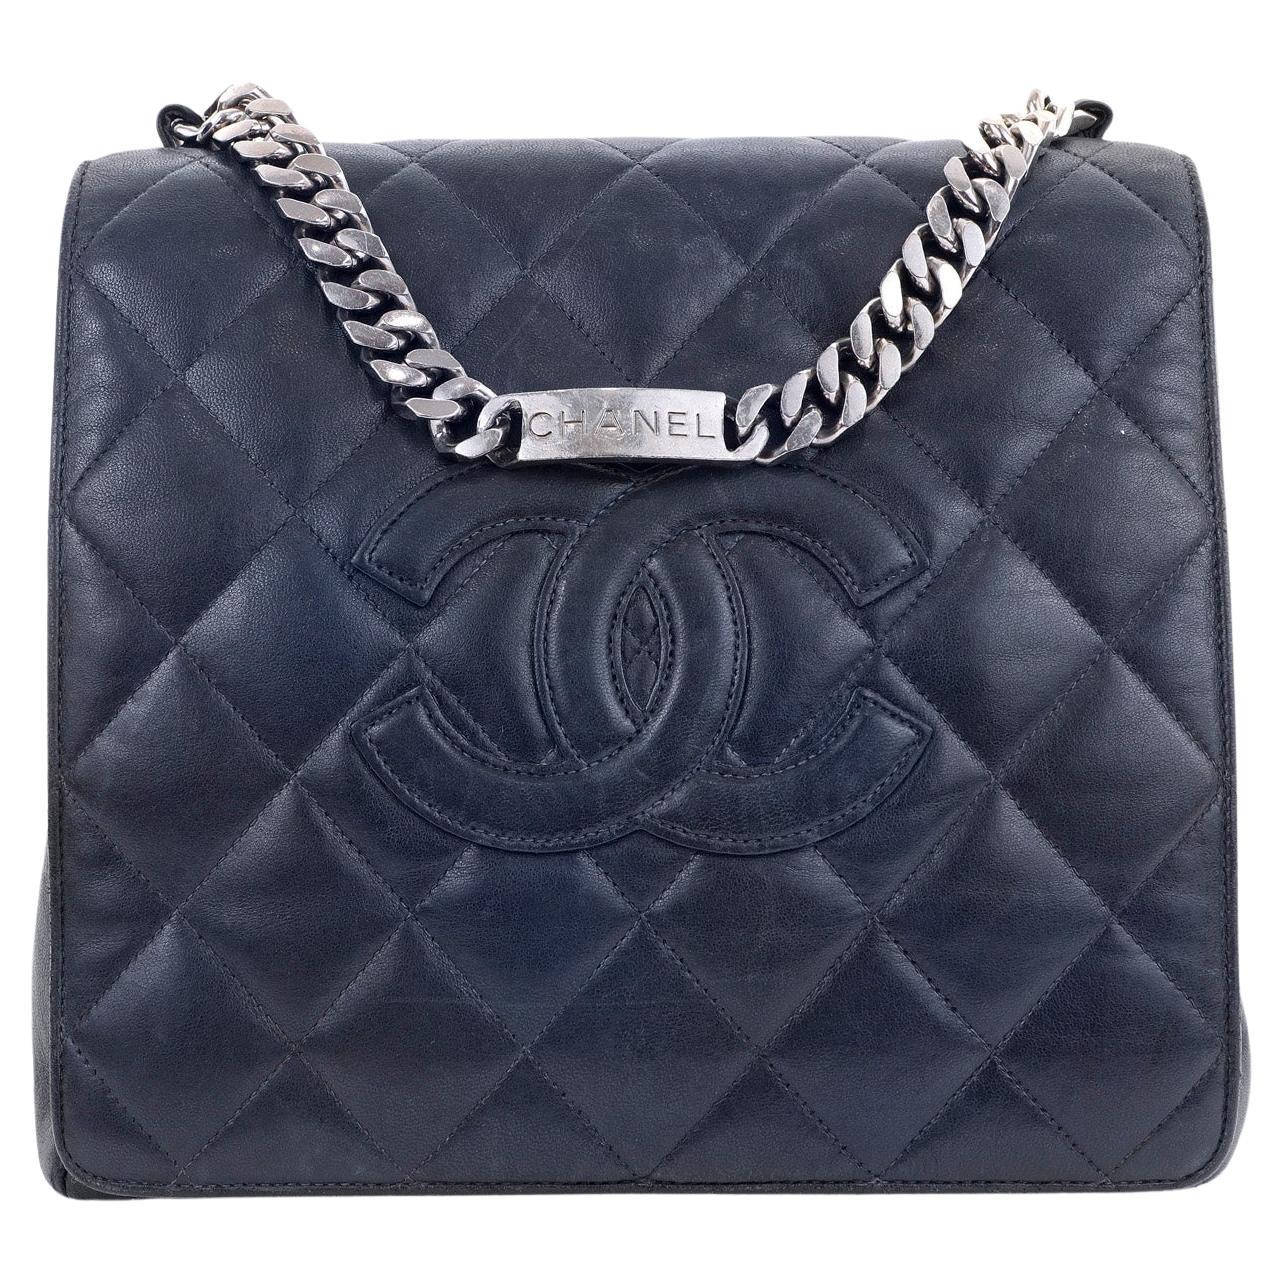 Chanel Navy Blue Lambskin Top Handle Flap Bag